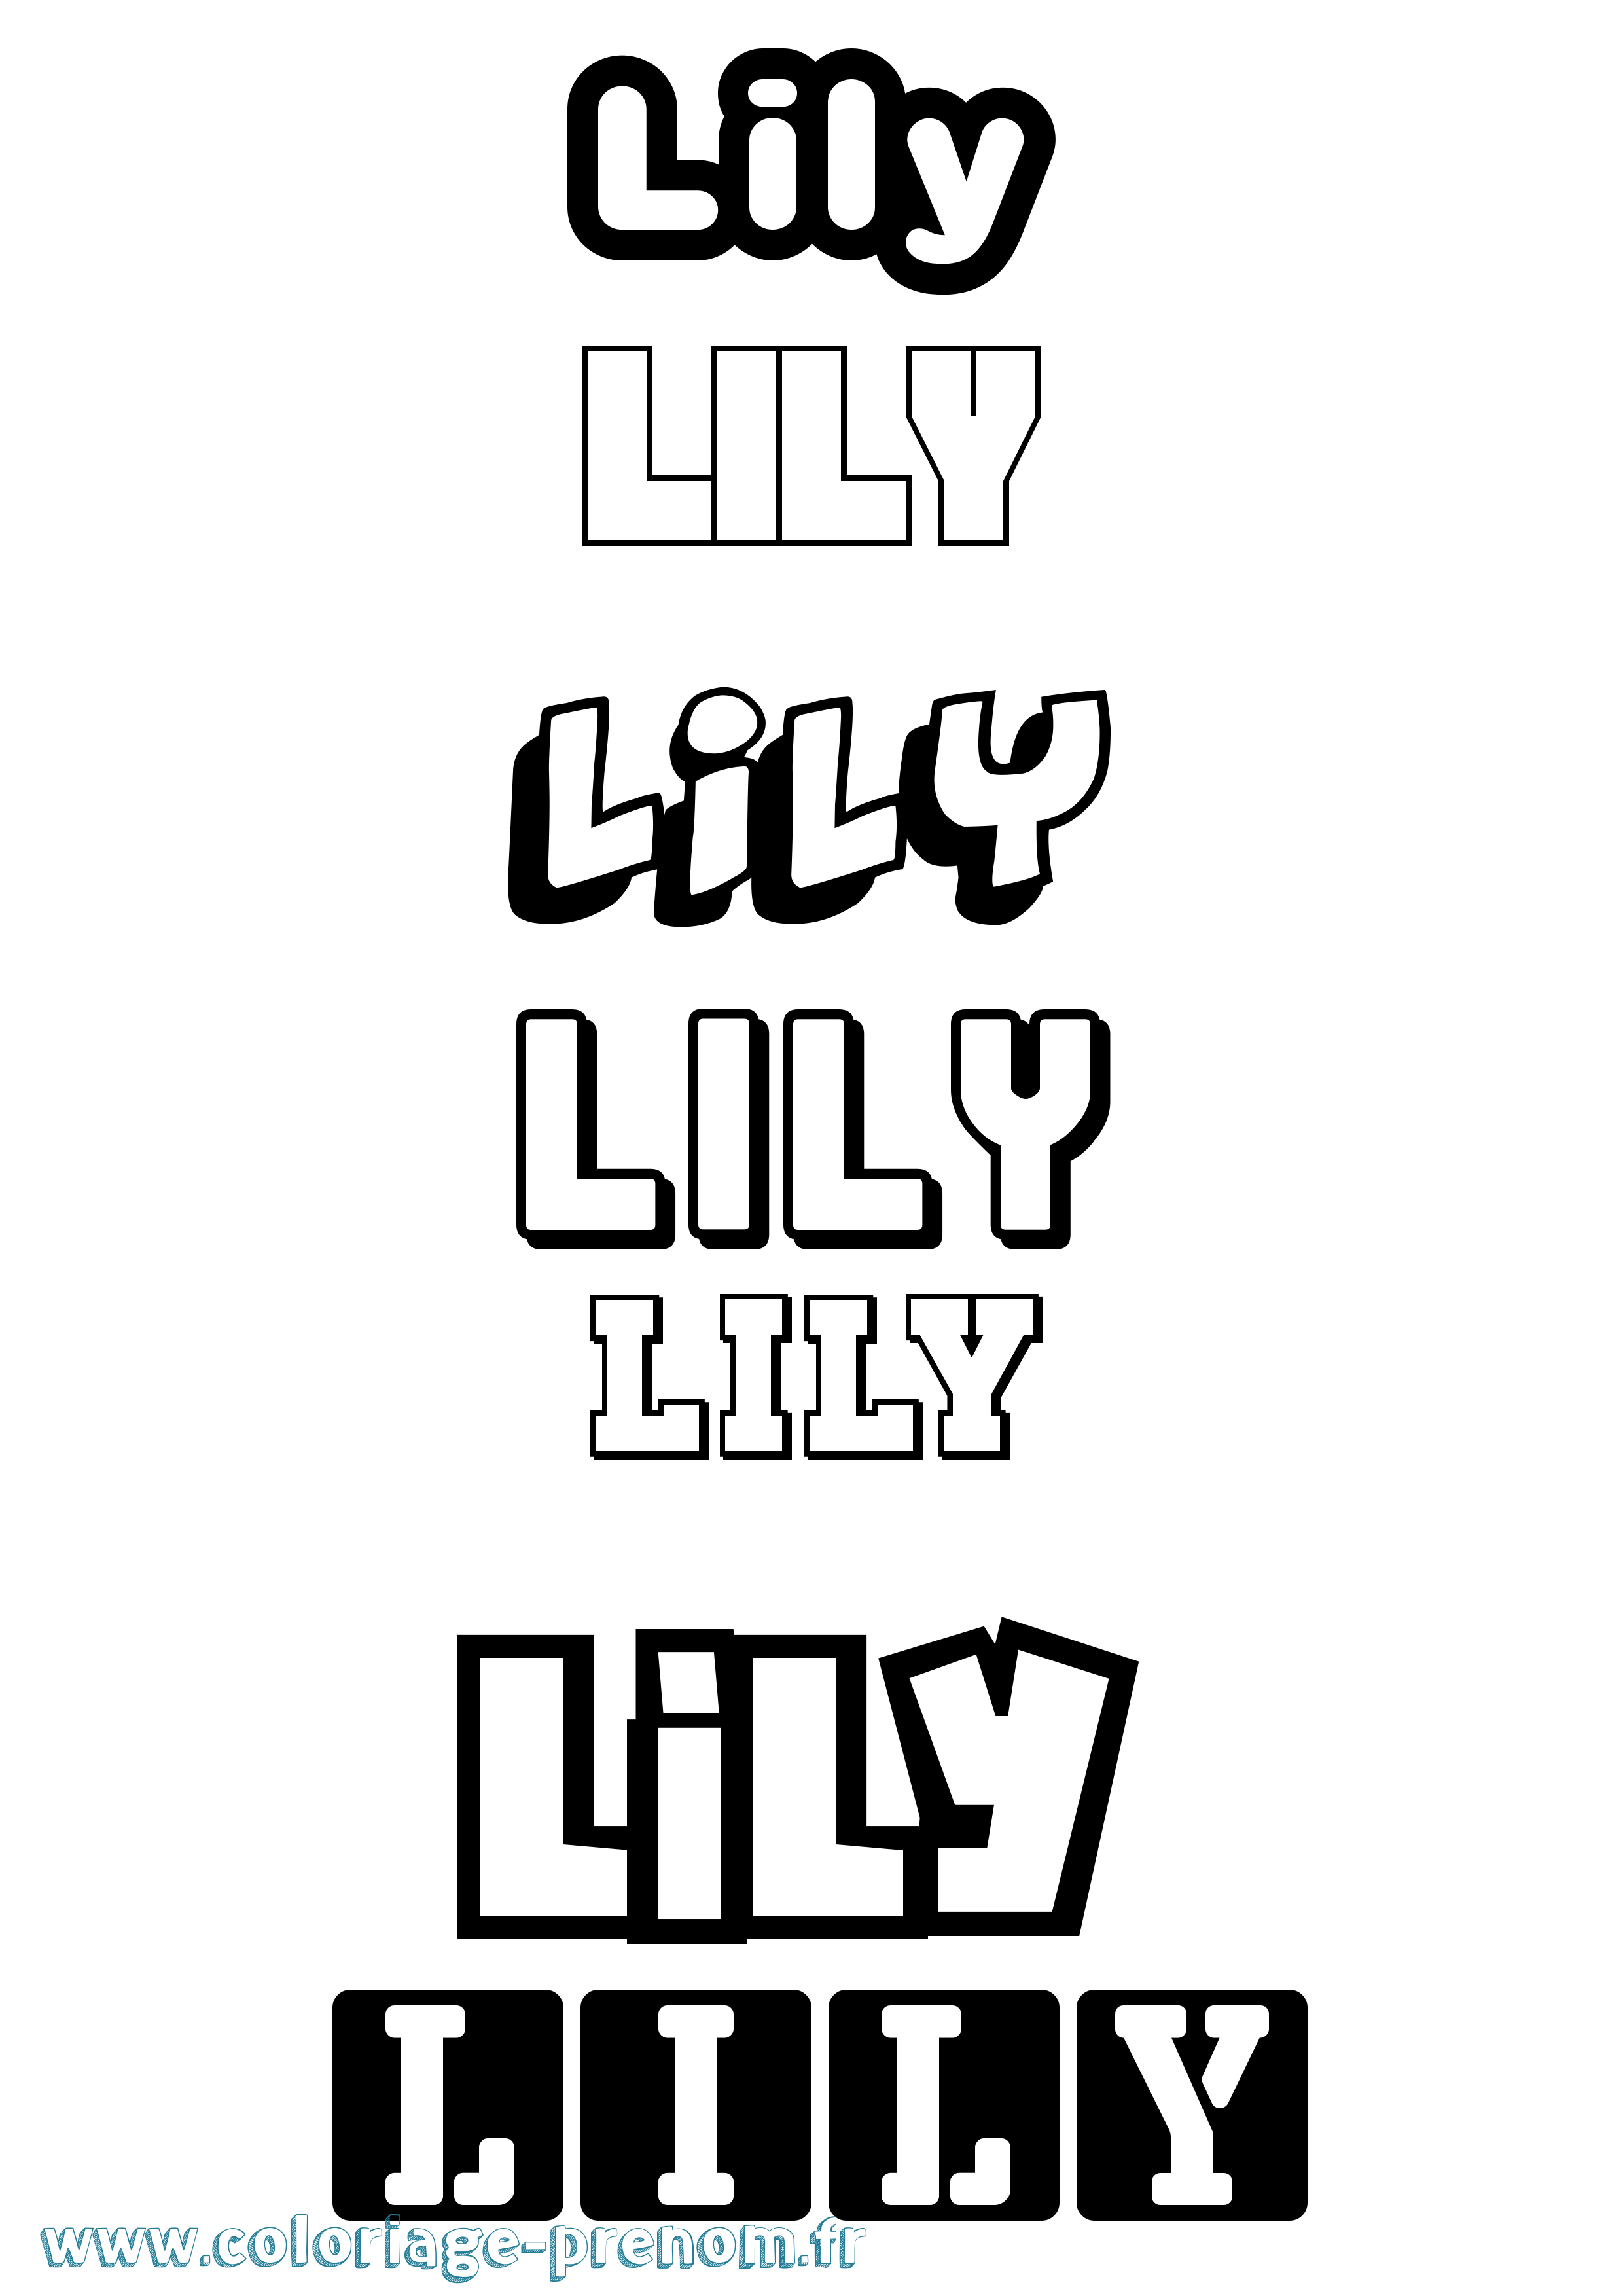 Coloriage prénom Lily